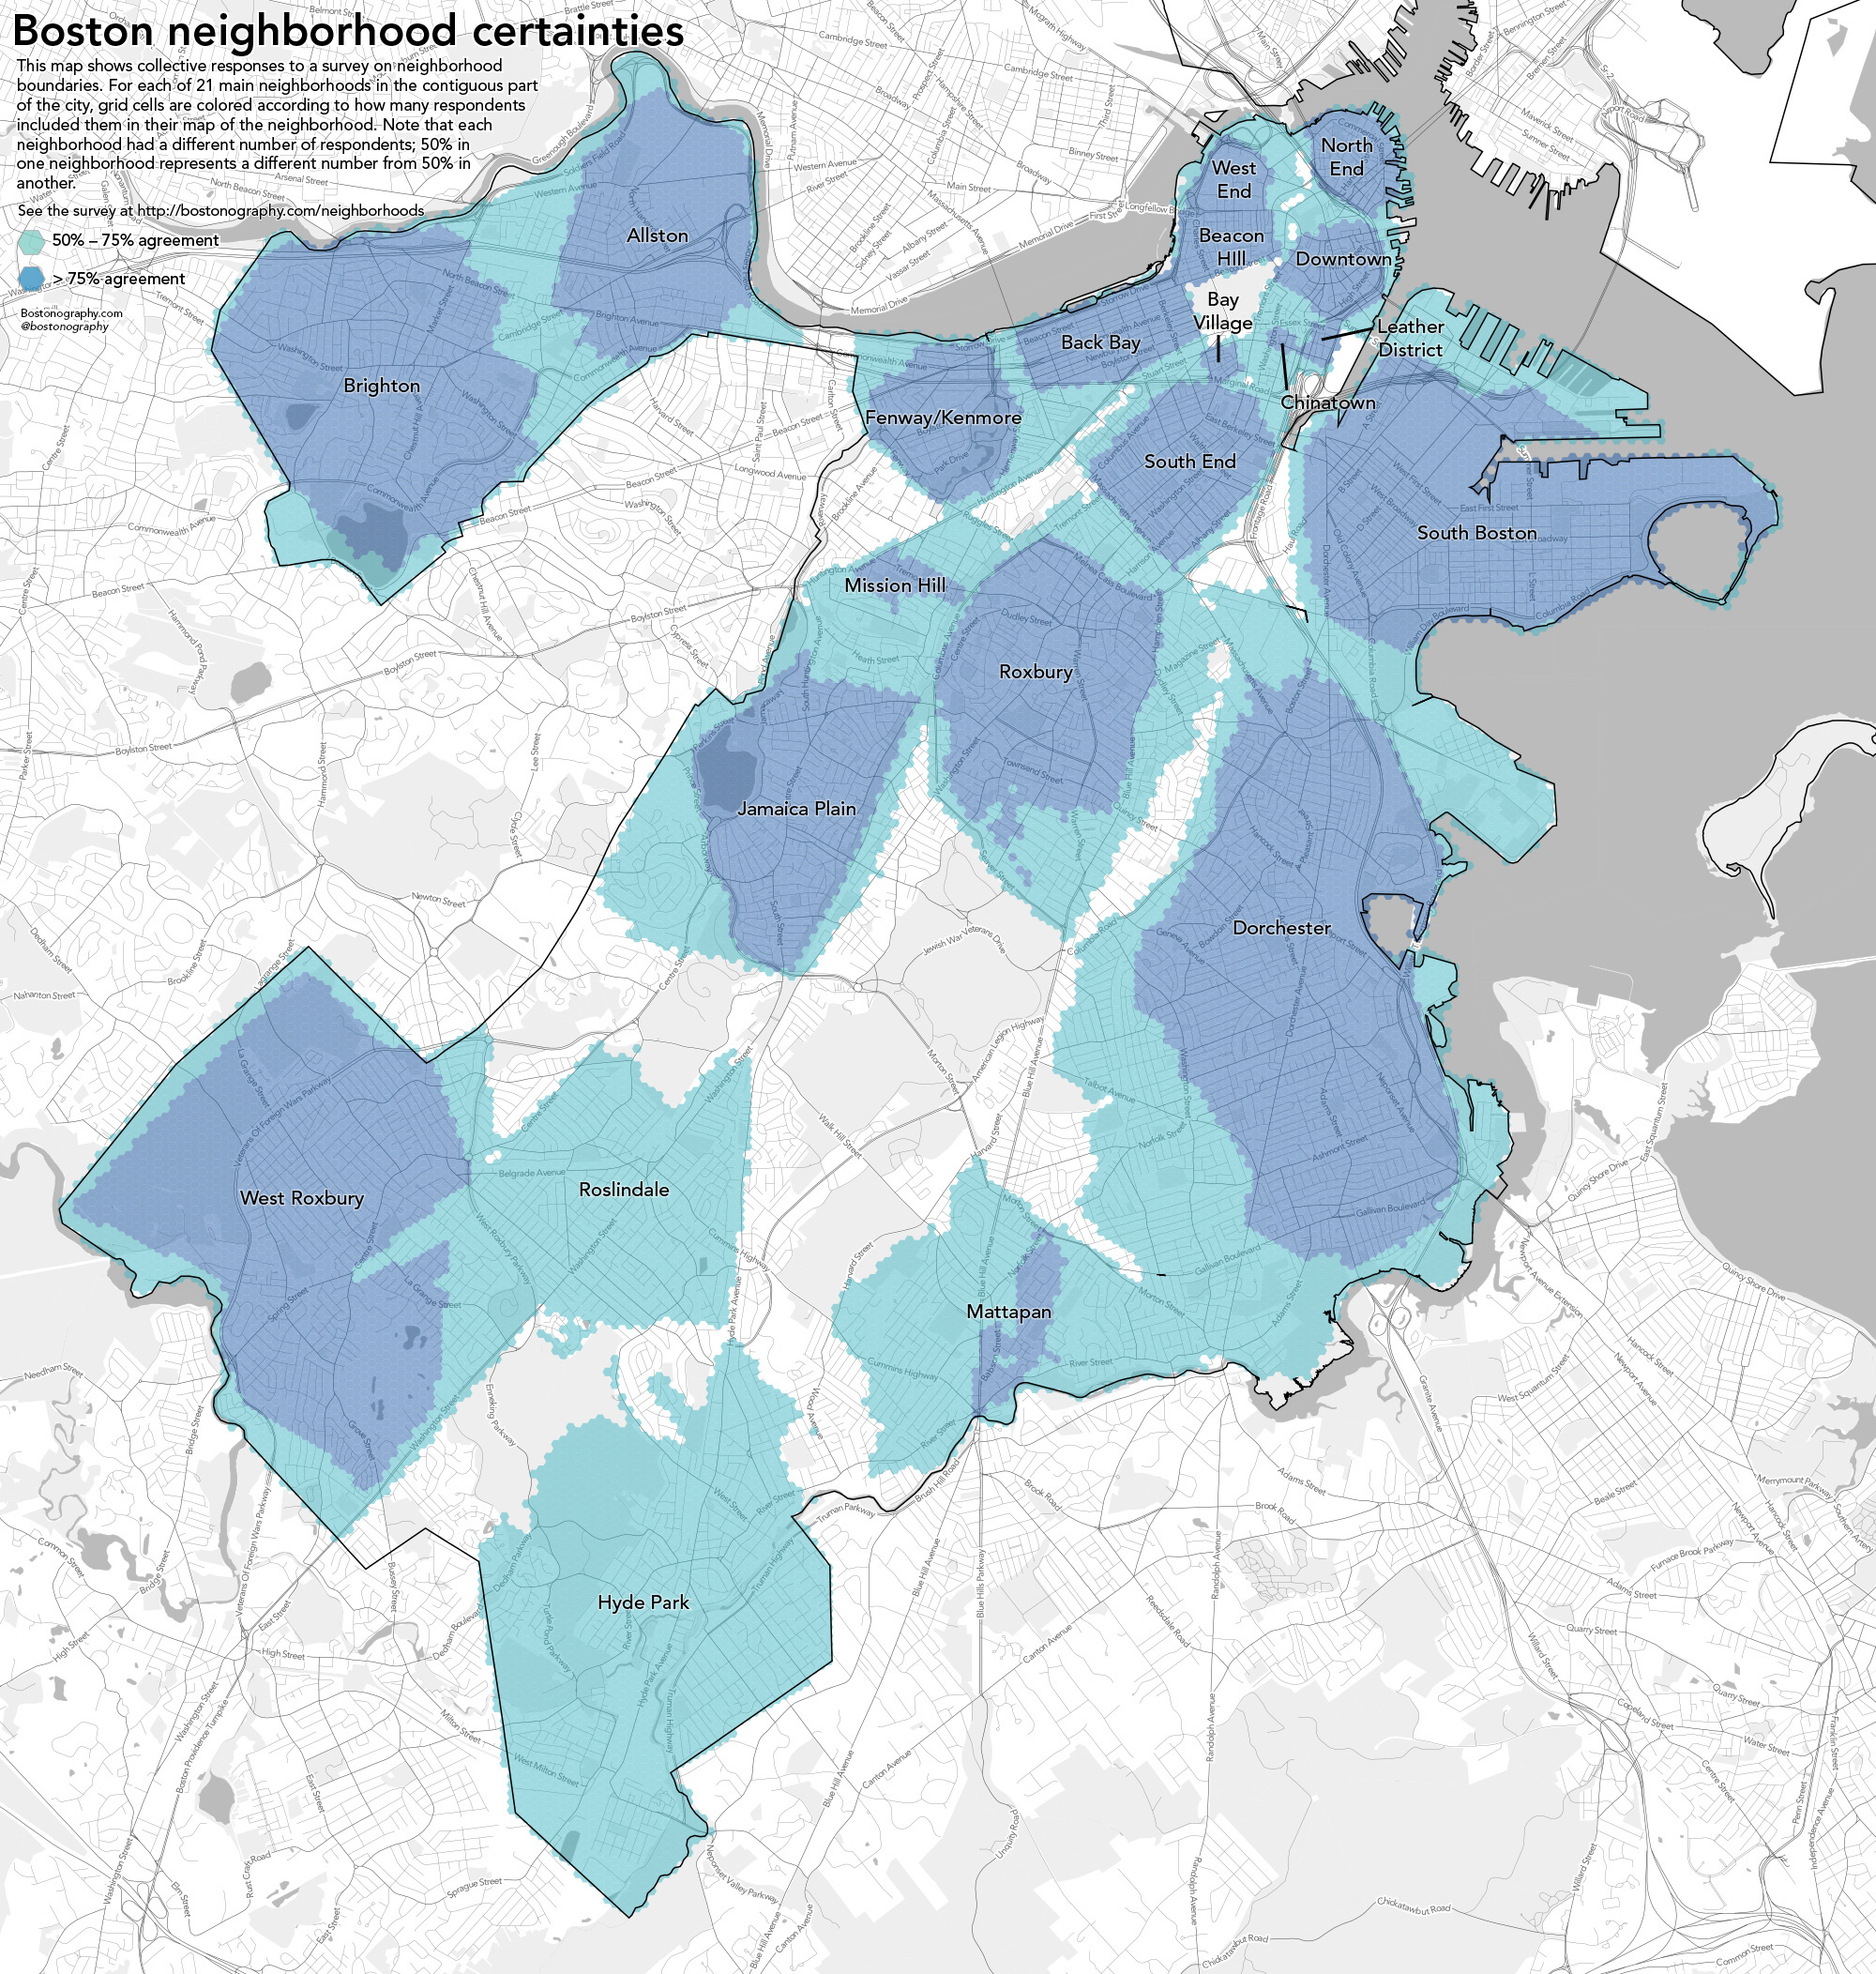 Boston neighborhood certainties. See above for details.